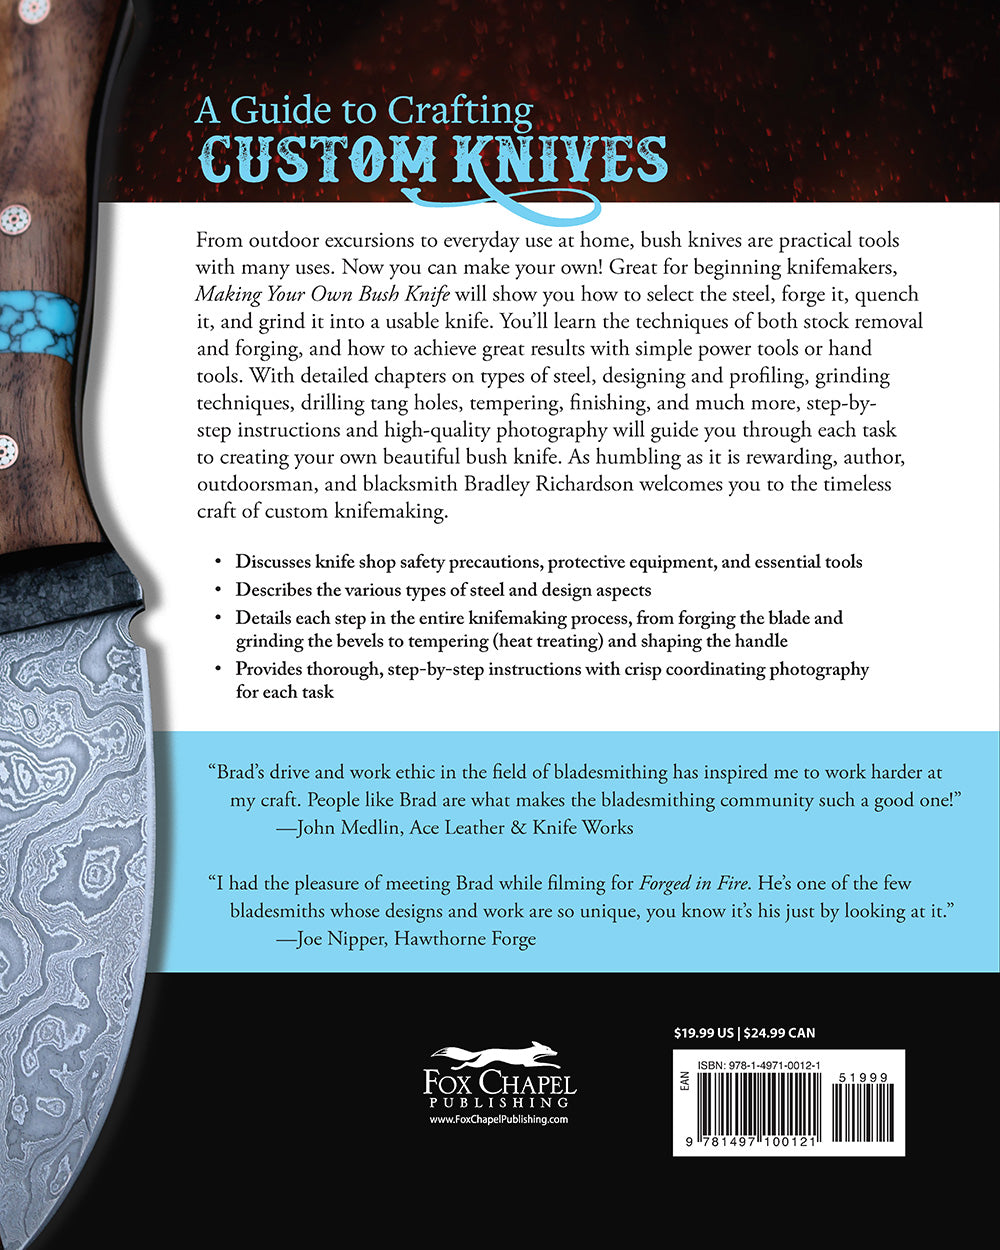 Knife Making Supplies - Artisan Supplies